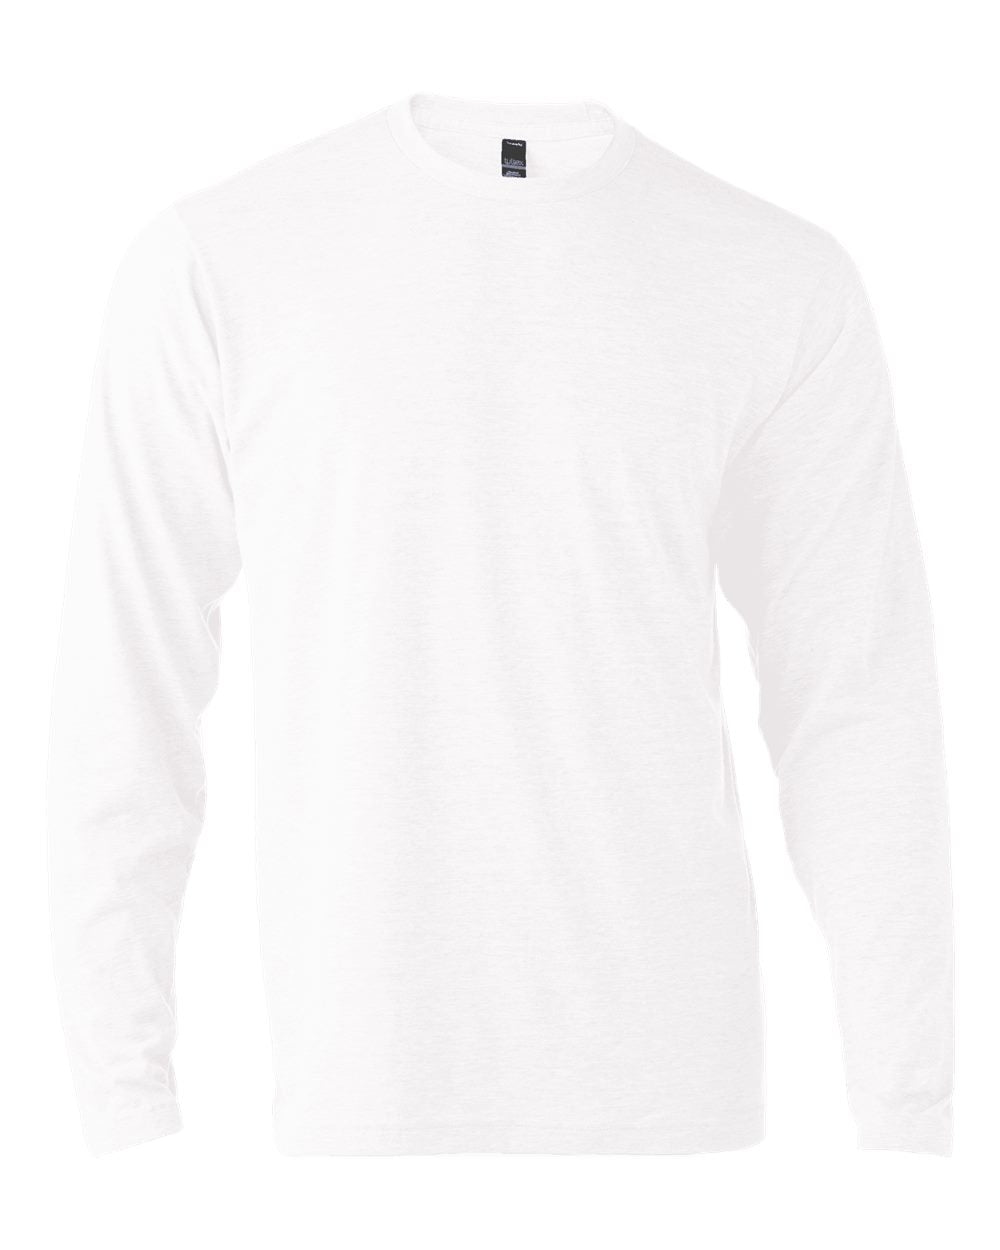 Tultex 242 - Unisex Poly-Rich Long Sleeve T-Shirt